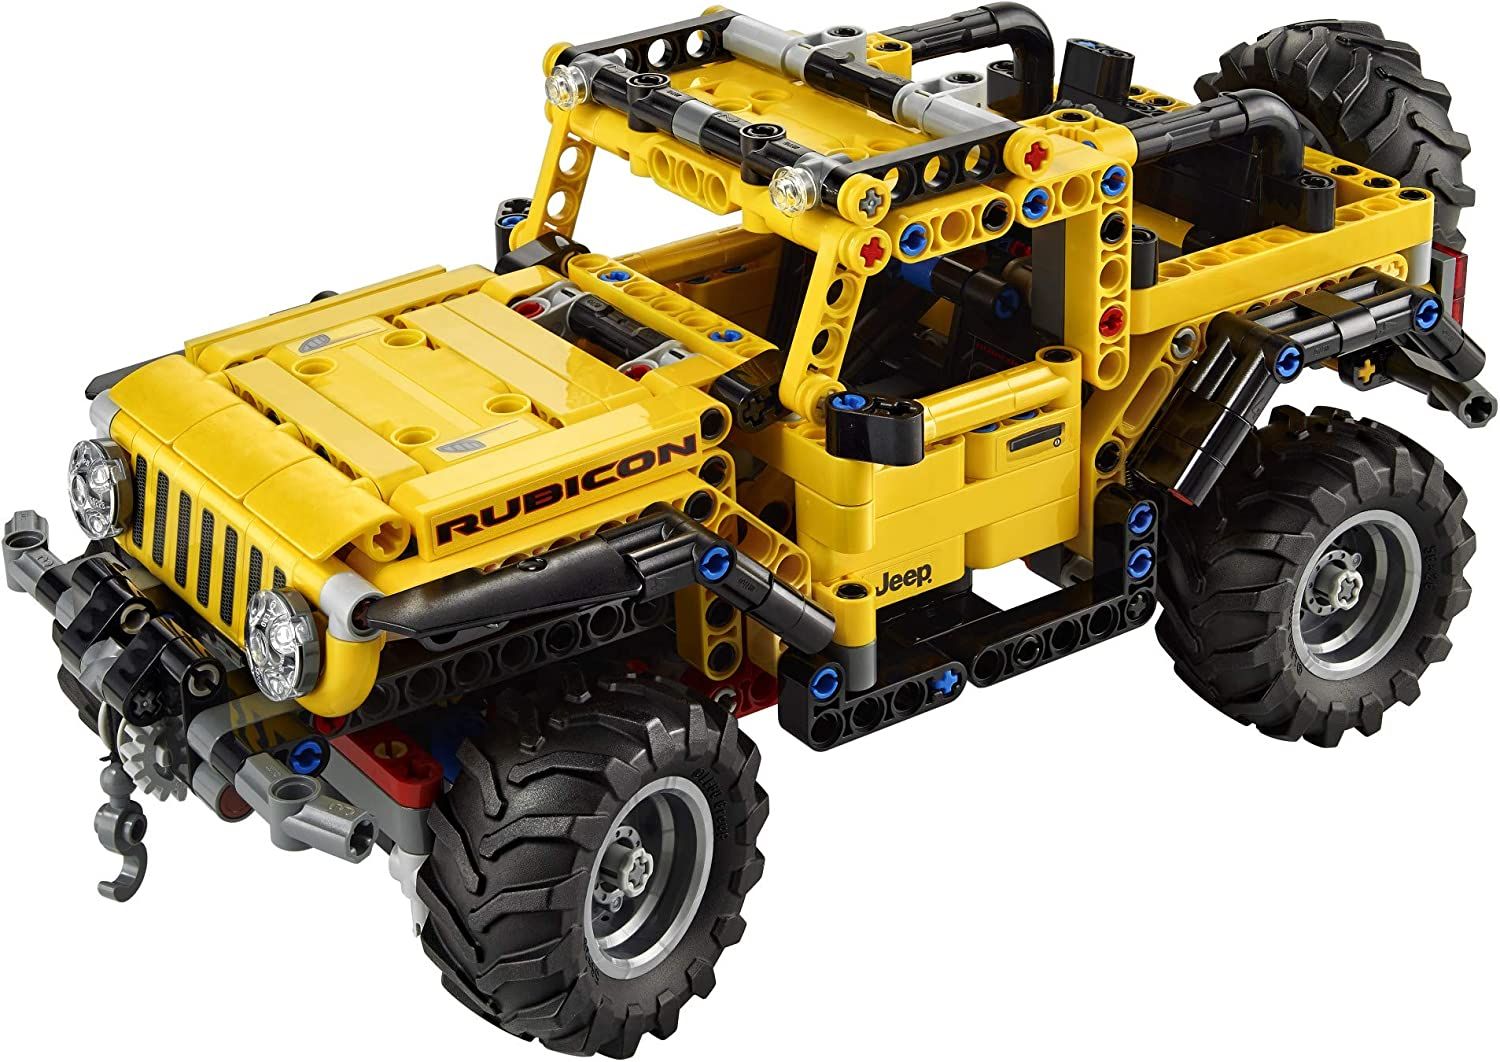 LEGO Technic Jeep Wrangler 42122 Building Toy (665 Pieces) 2